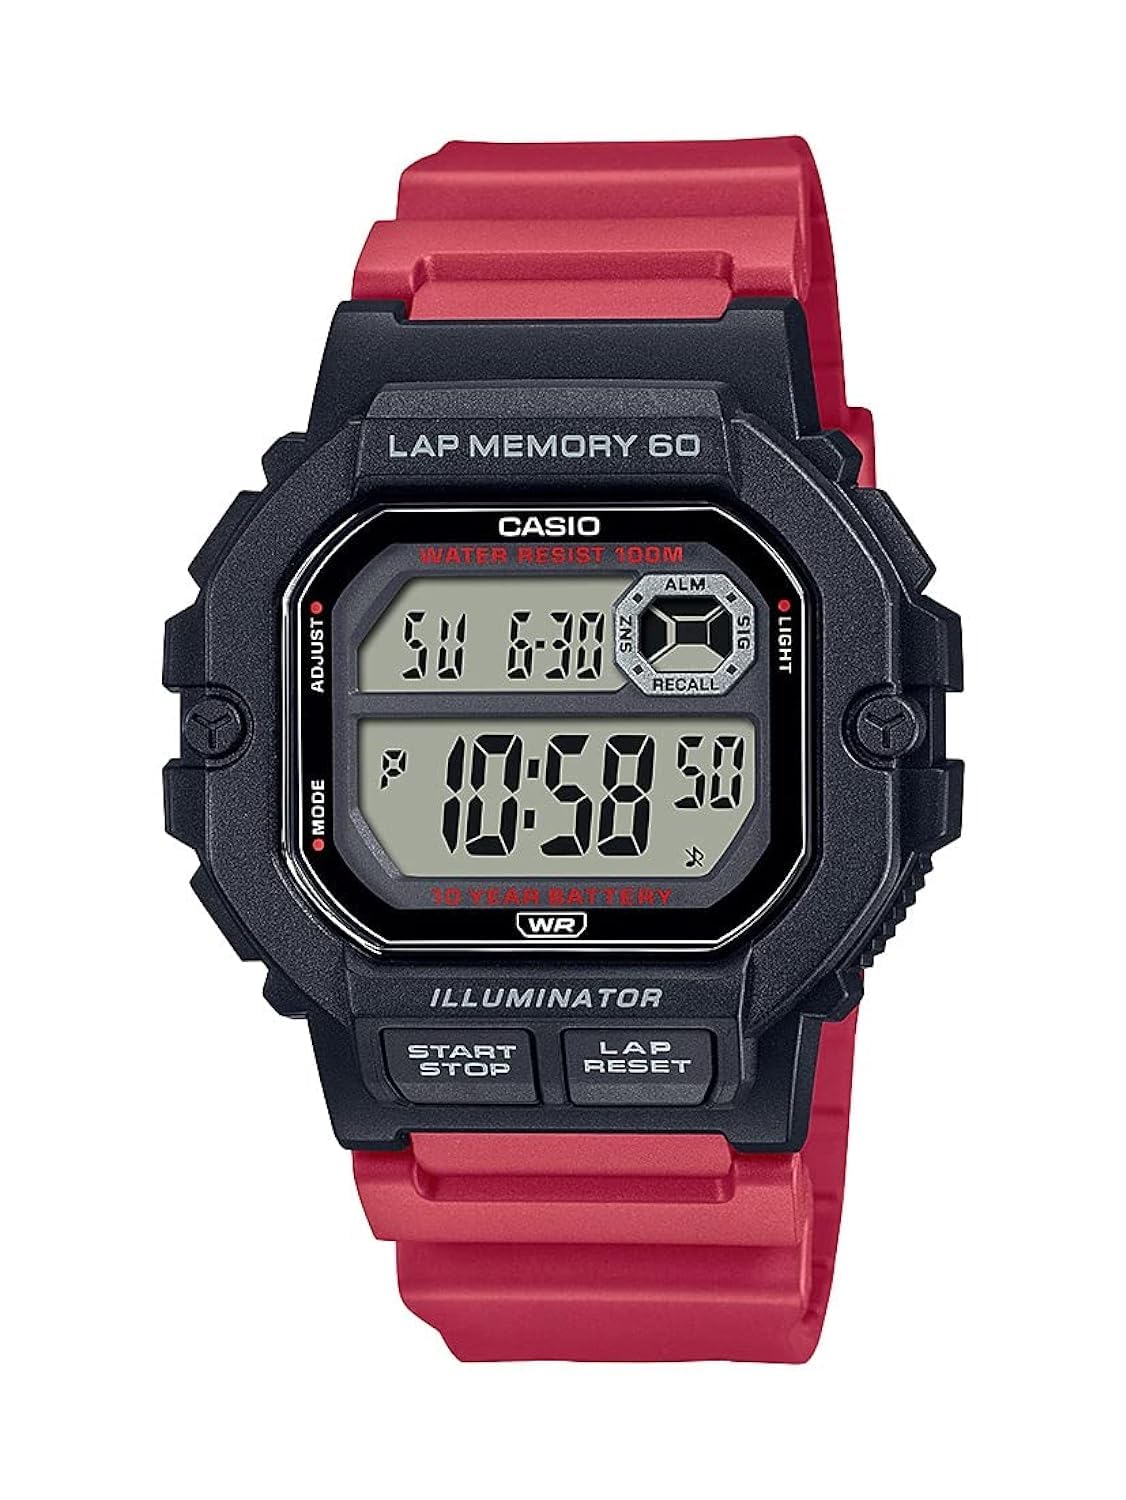 Casio LED Illuminator 10-Year Battery Men's Digital Sports Watch w/ 60-Lap Memory (WS-1400H-4AV) $17.97 + Free Shipping w/ Prime or on $35+